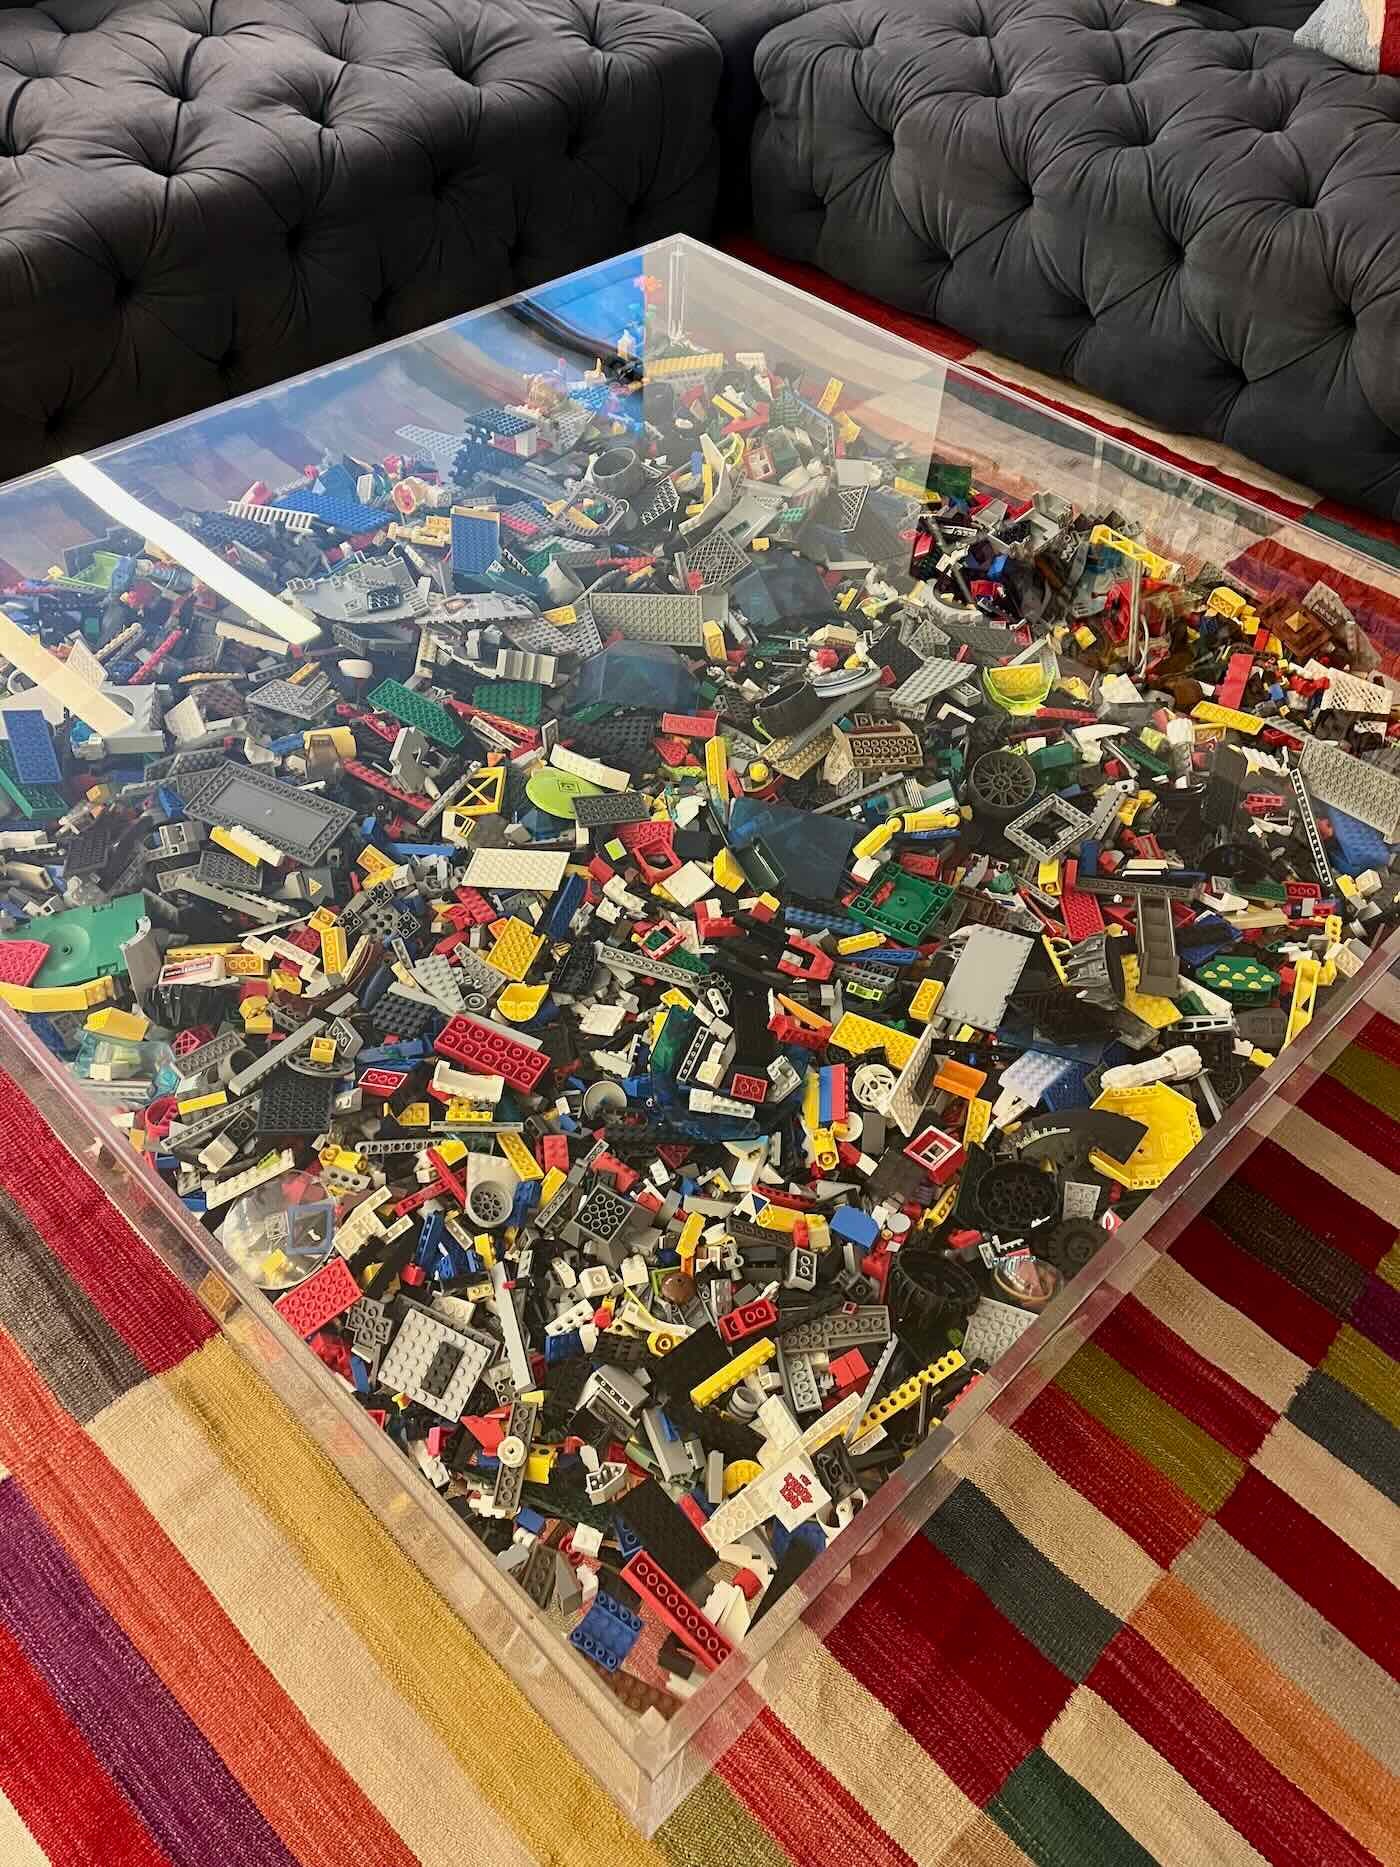 plexiglass coffee table full of Legos